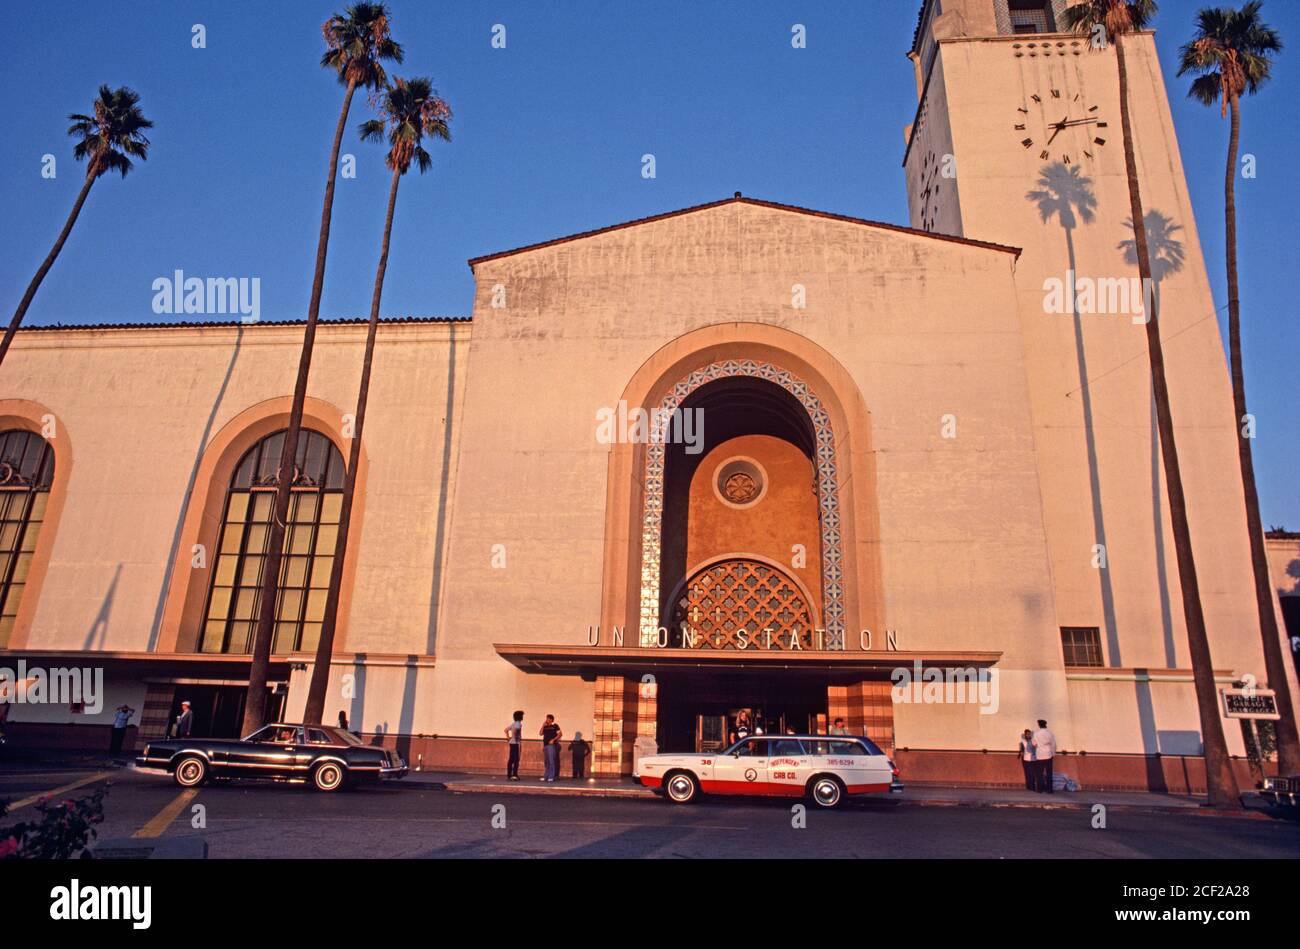 LOS ANGELES UNION STATION, AMTRAK, CALIFORNIA, USA, 1970s Stock Photo